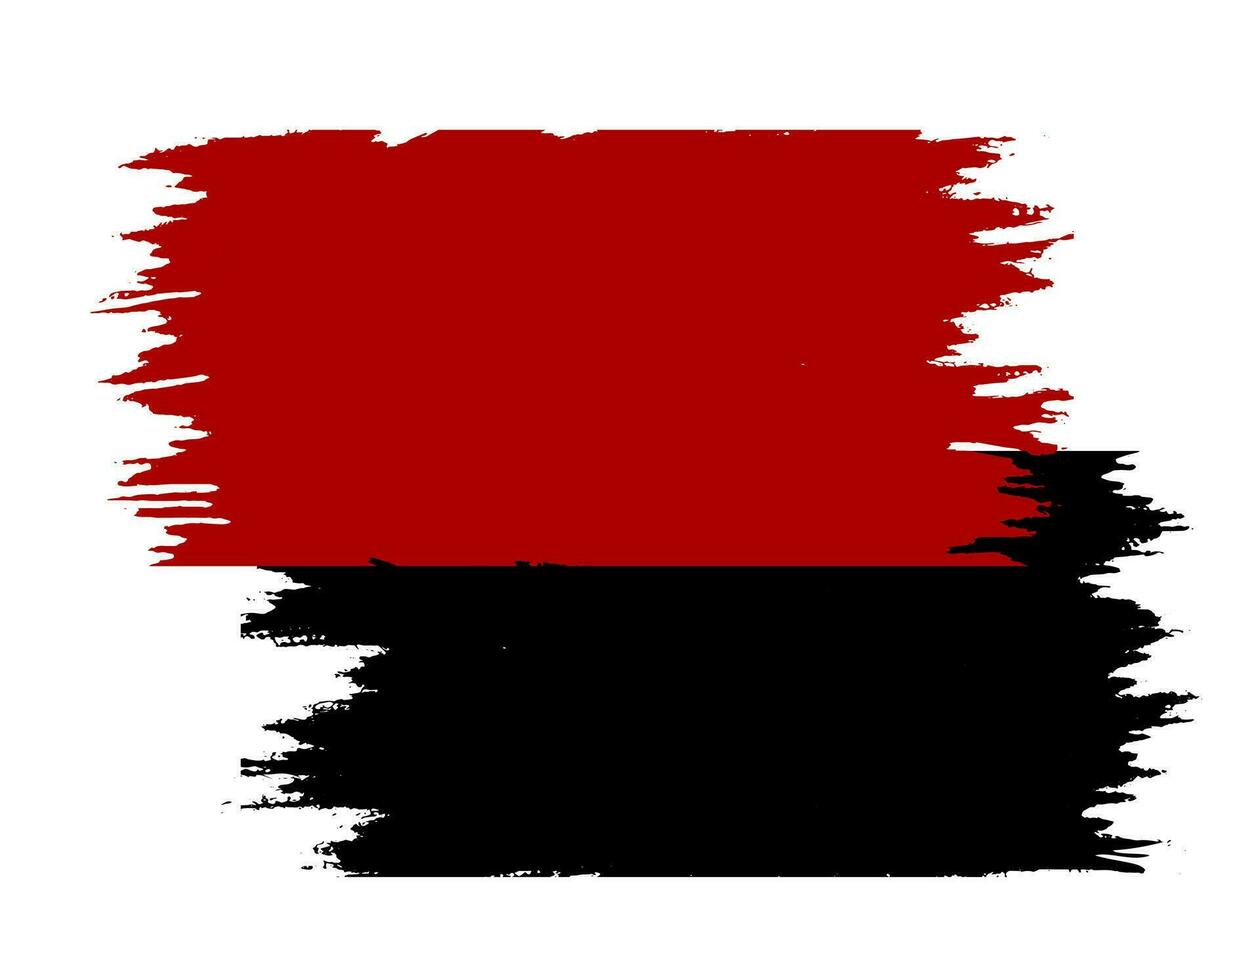 a red and black brush stroke on a white background set, malawi brush stroke brush flag grunge yemen flag grunge egypt flag stroke flag malawi colors vector